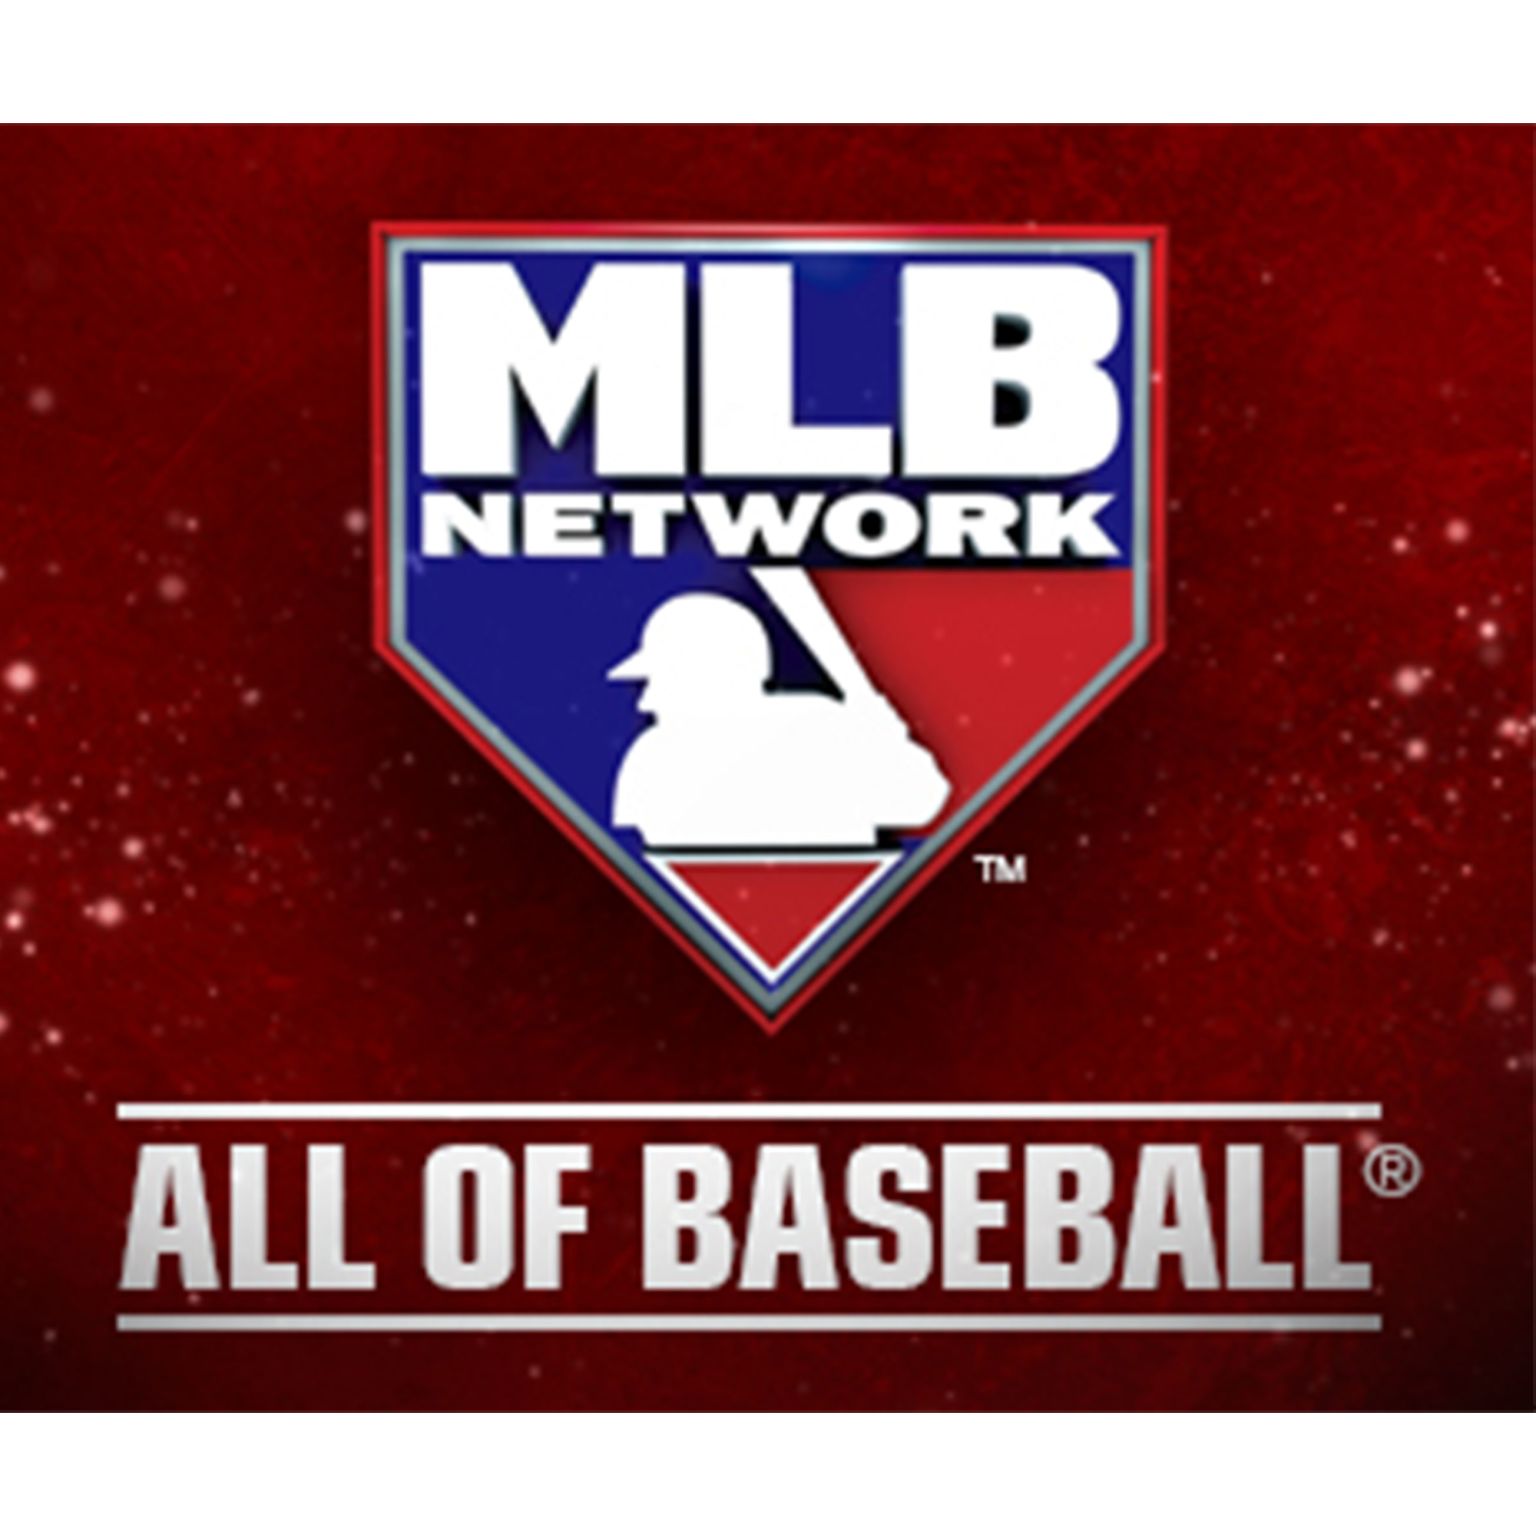 MLB Spring Training games on MLB.TV